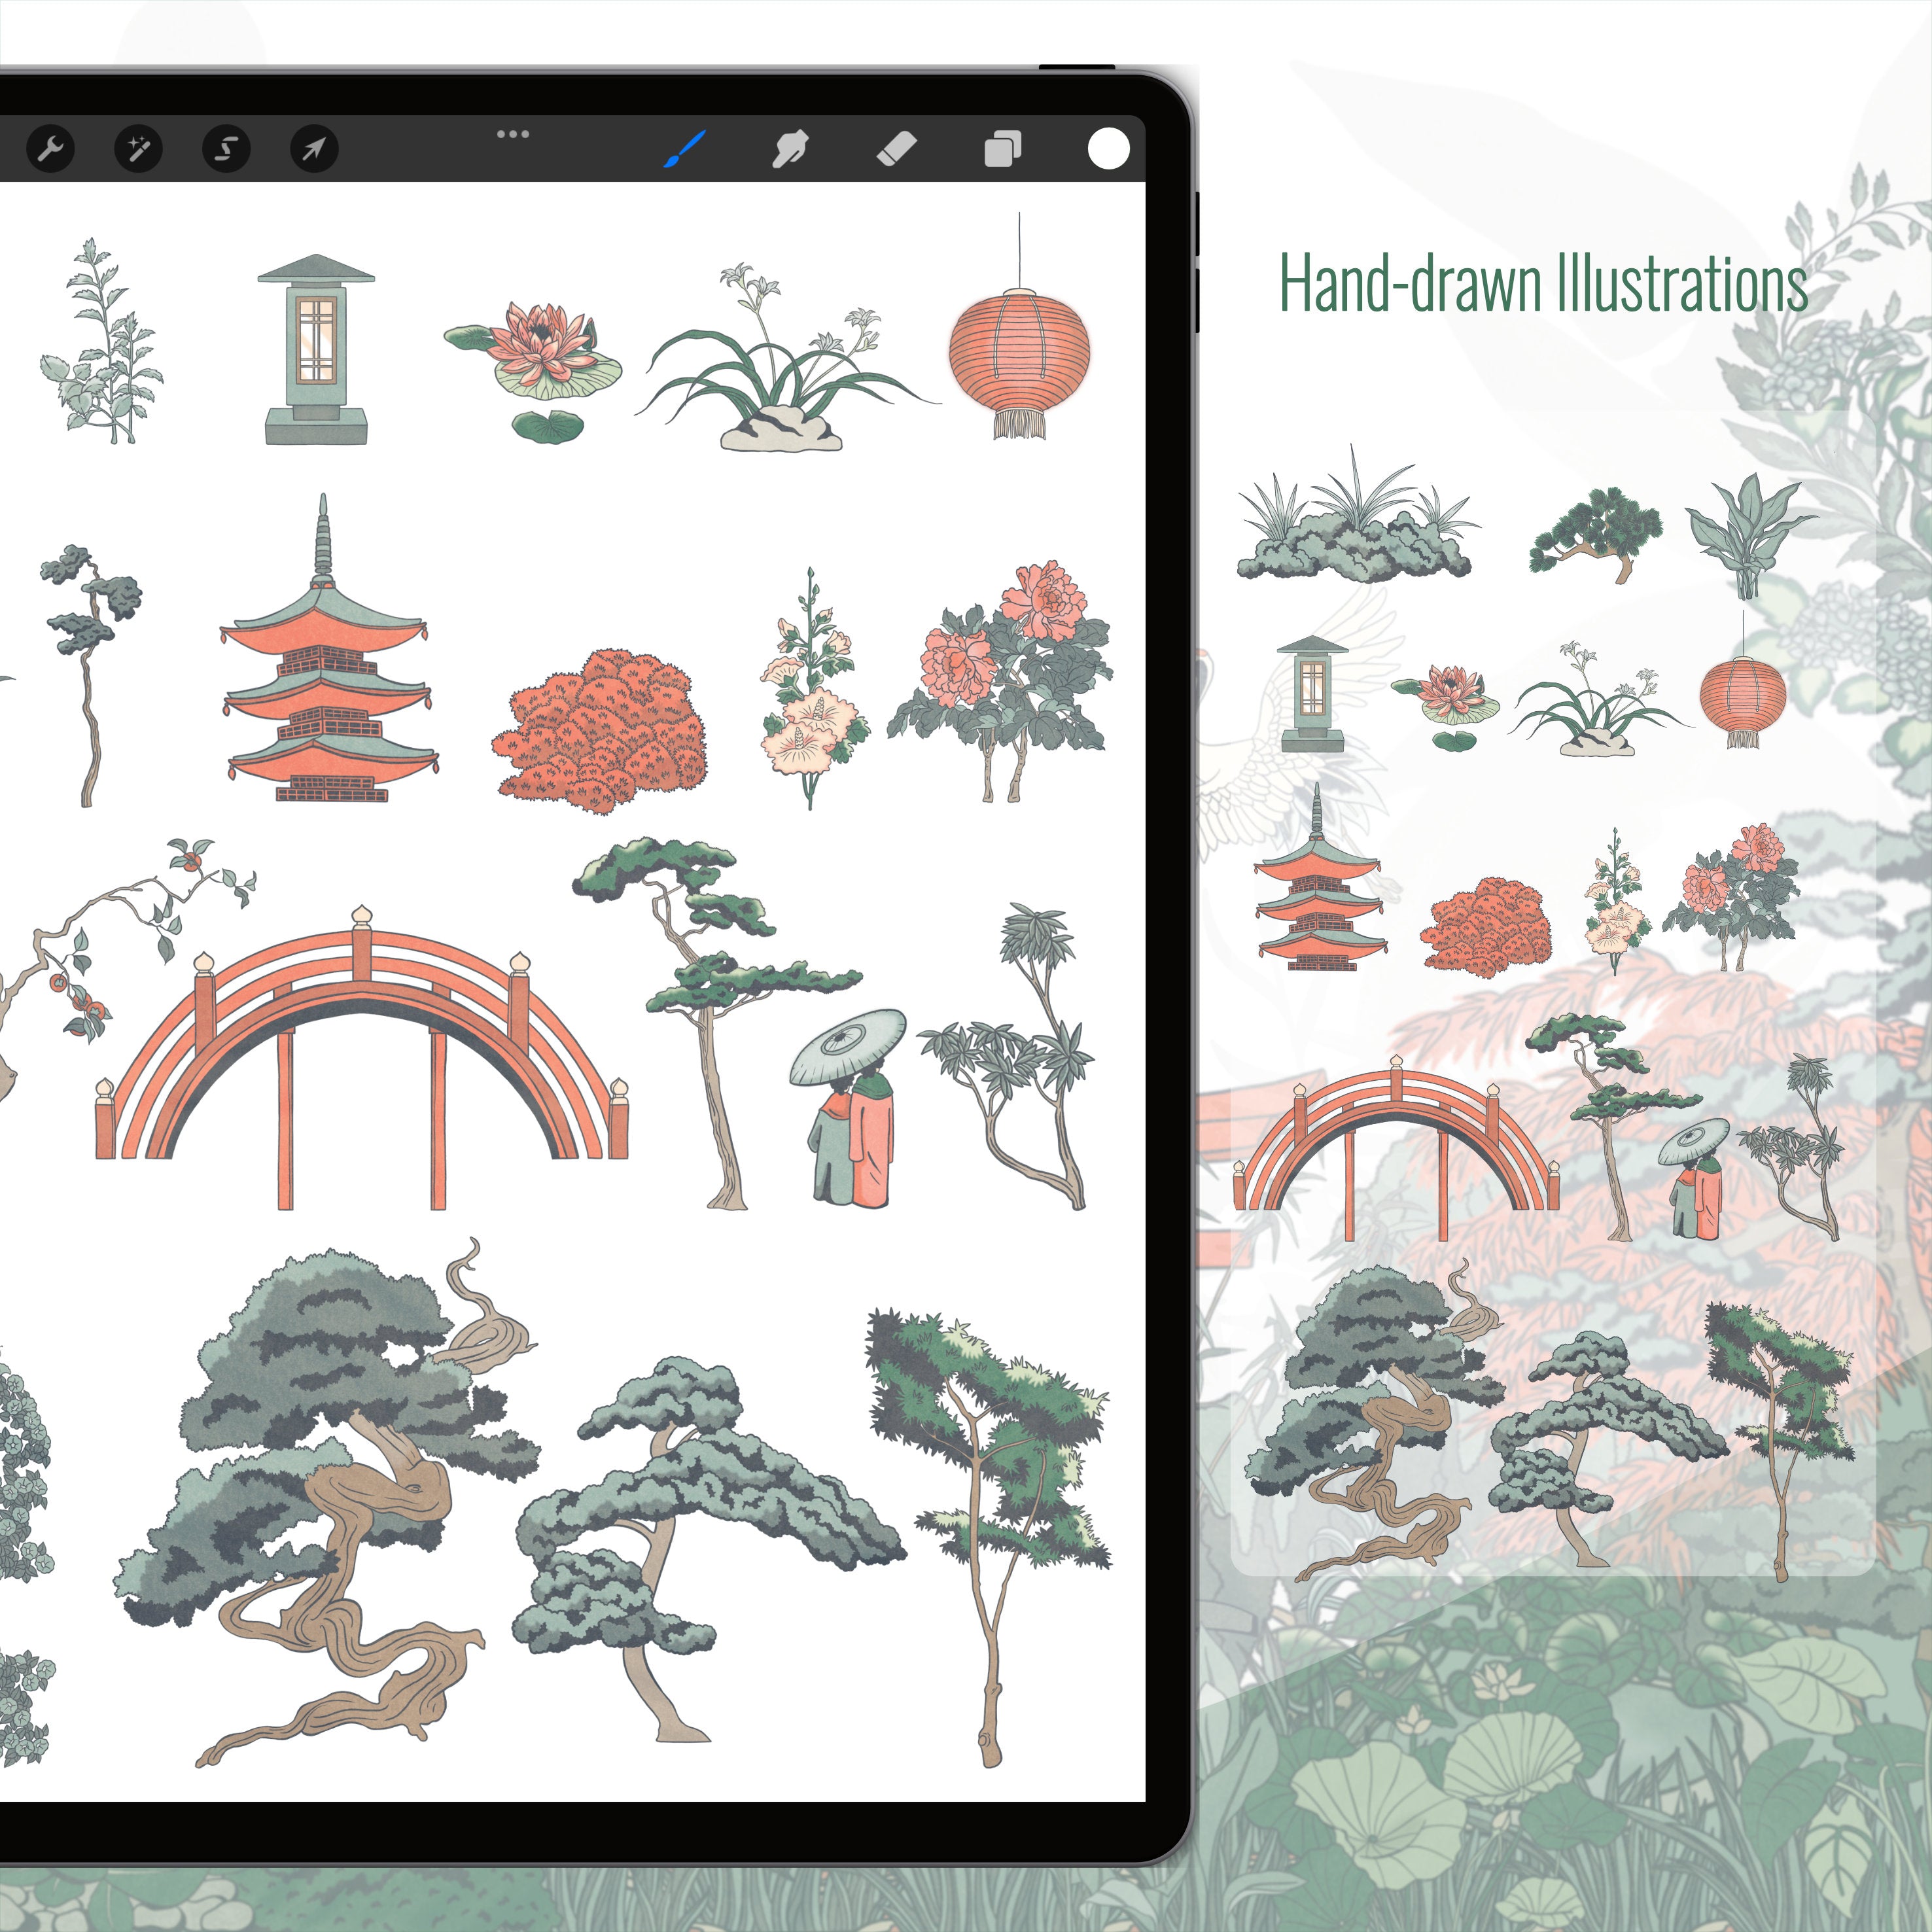 Procreate Japanese Art Vegetation Brushset & Illustrations 2 PNG - Toffu Co